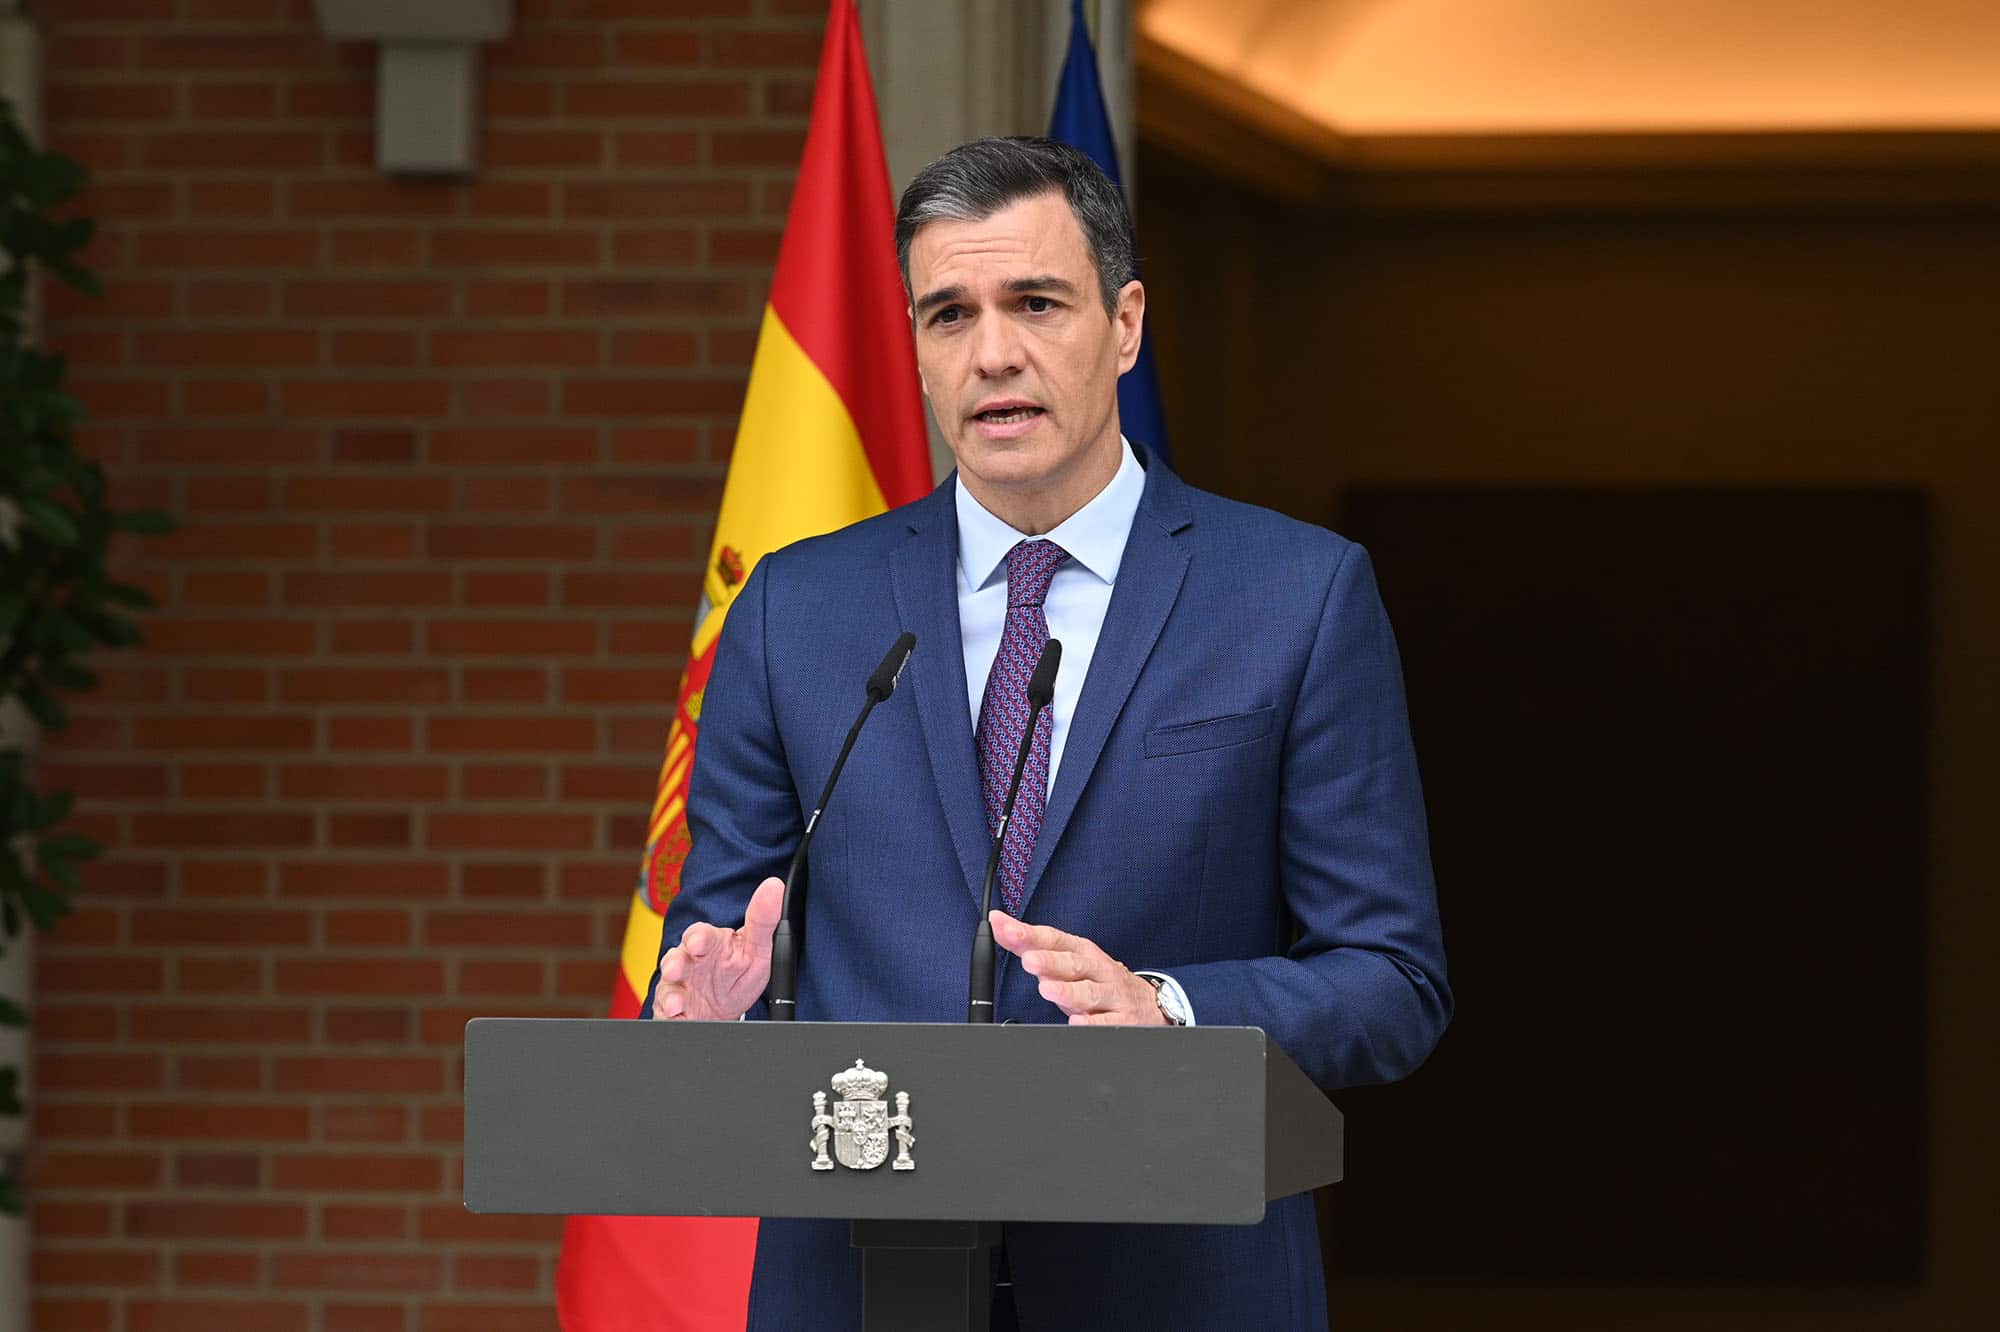 Pedro Sanchez, Spain's PM dissolves Parliament and calls for national elections